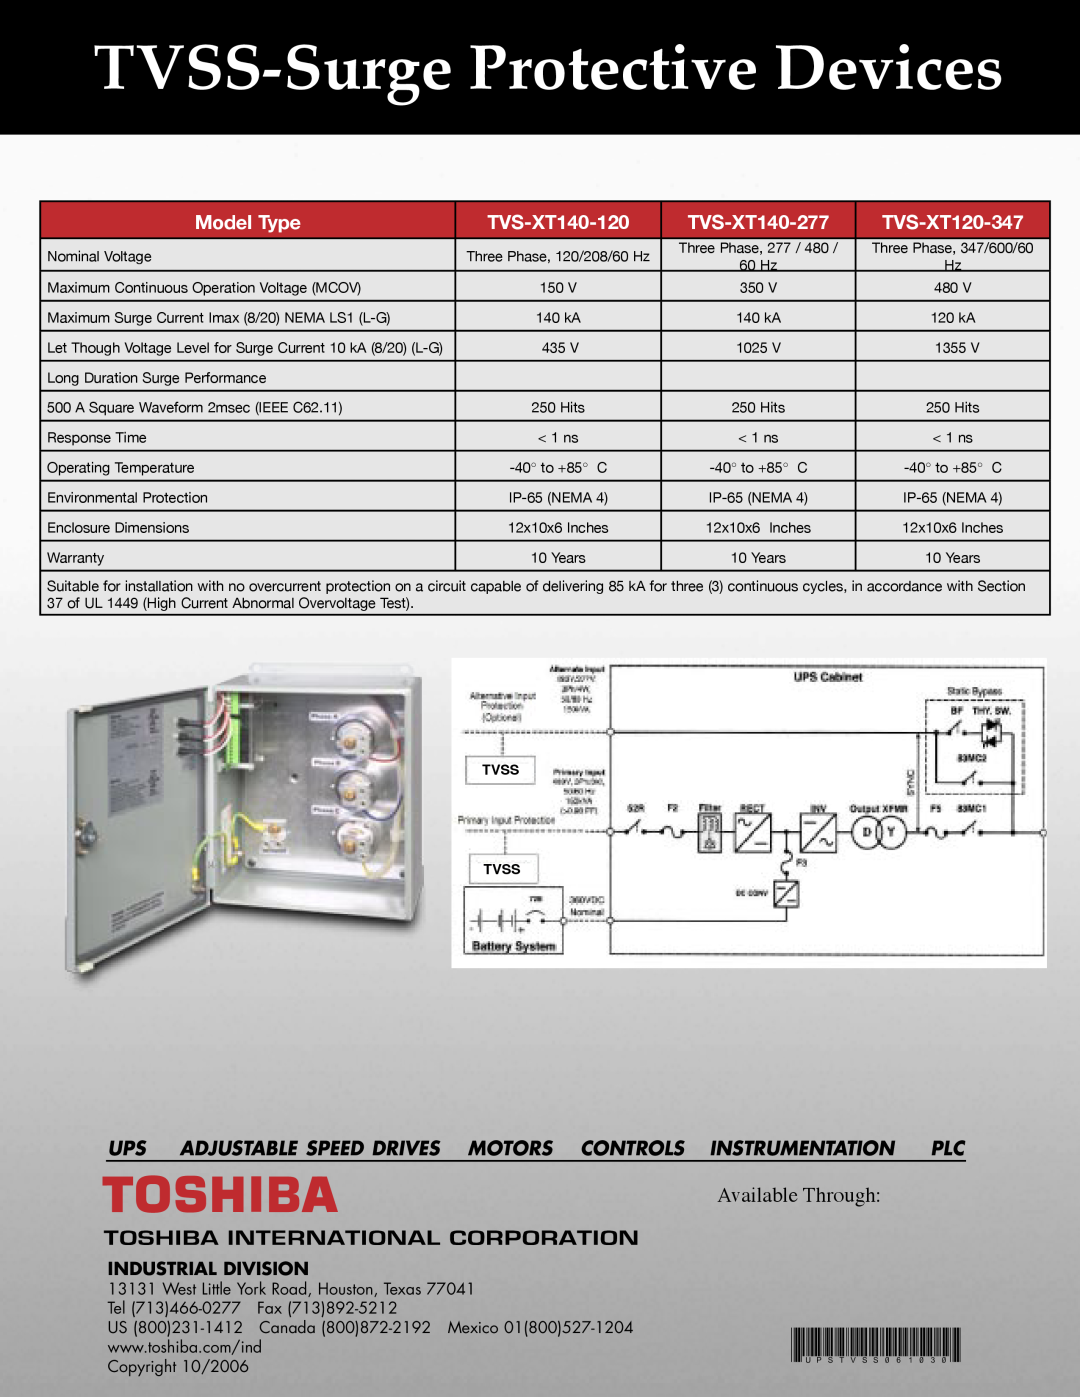 Toshiba TVS-XT120-347 TVSS-Surge Protective Devices, Available Through, Model Type, TVS-XT140-120, TVS-XT140-277, Canada 